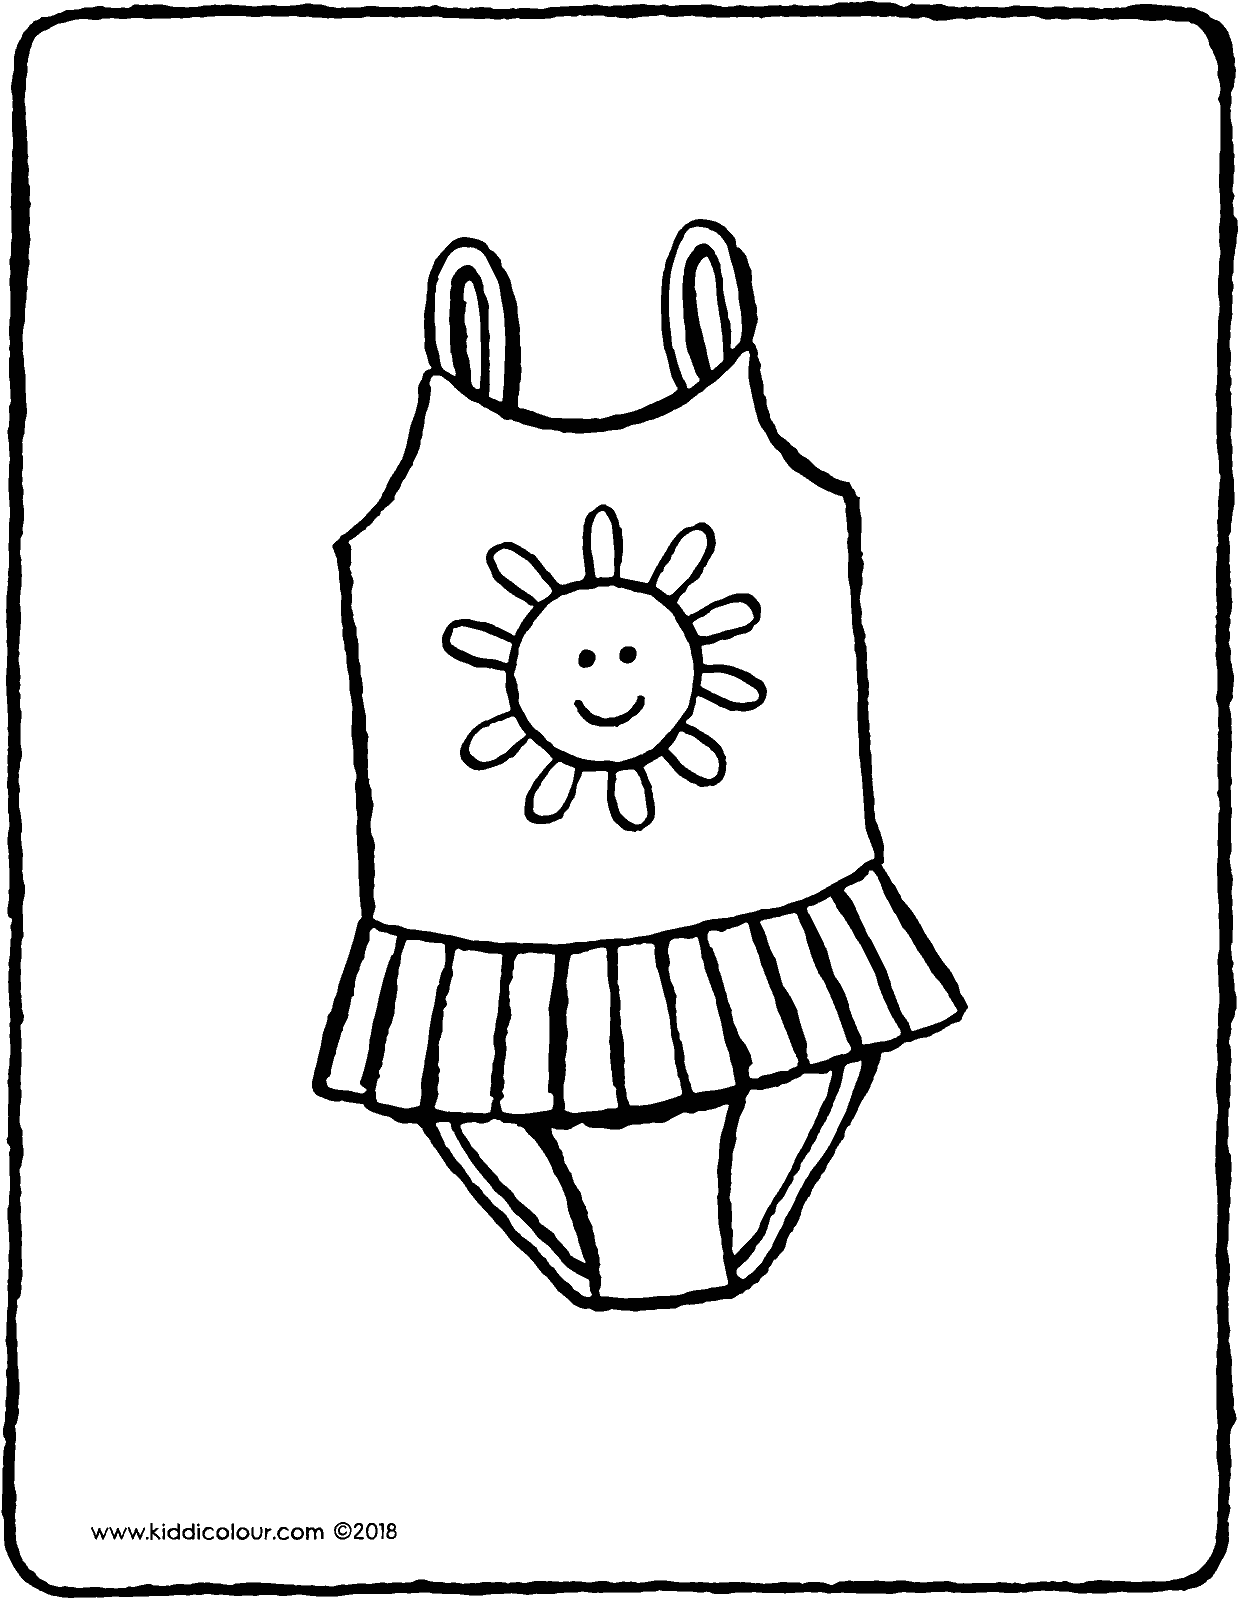 swimsuit - kiddicolour